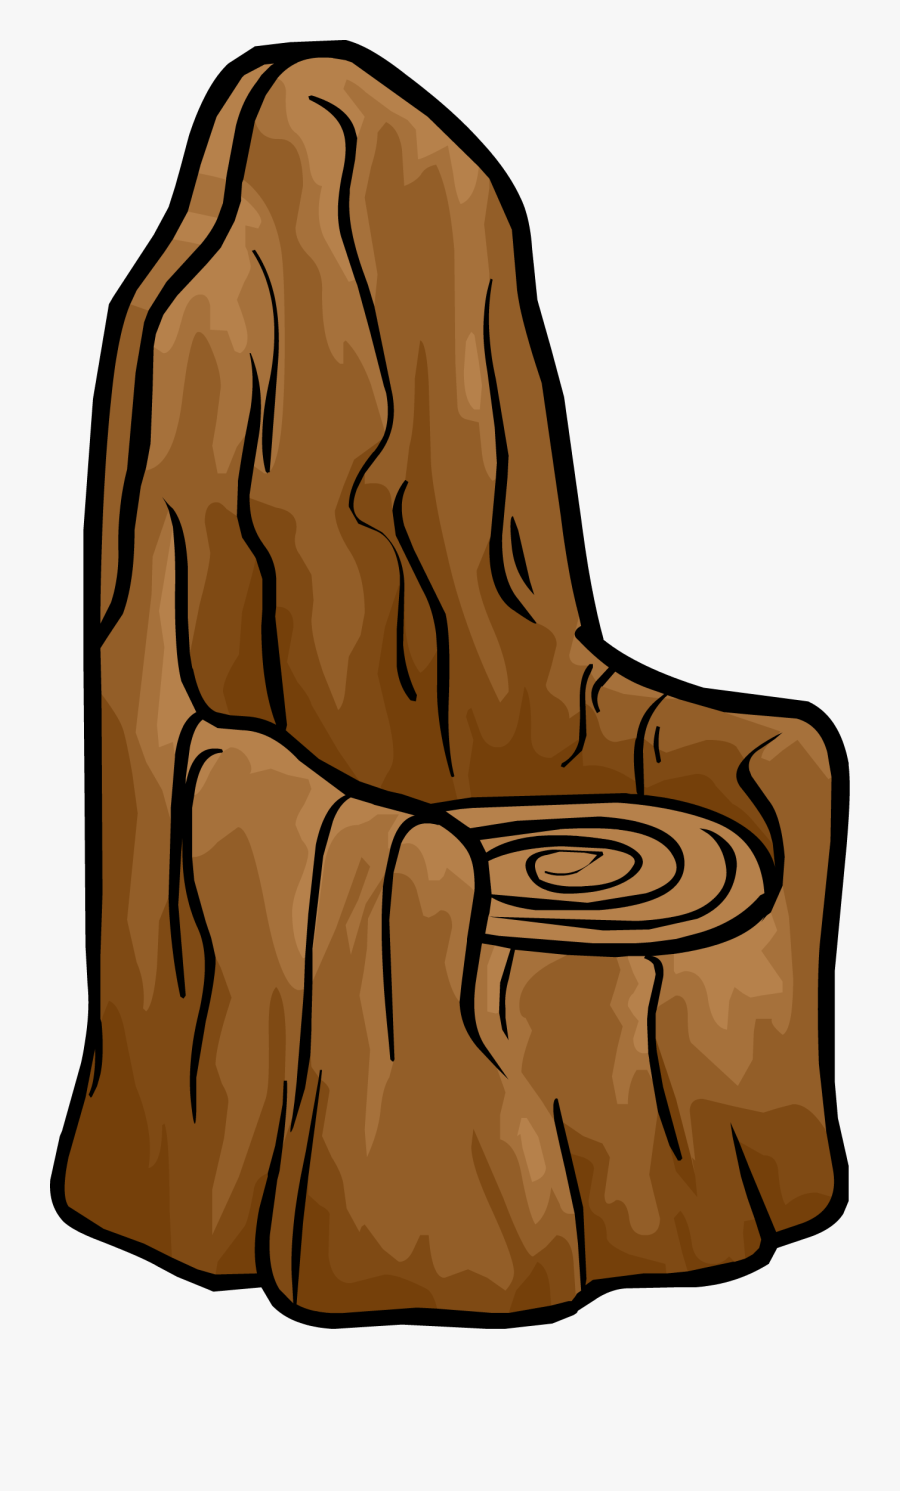 Tree Stump Chair - Tree Chair Clipart, Transparent Clipart